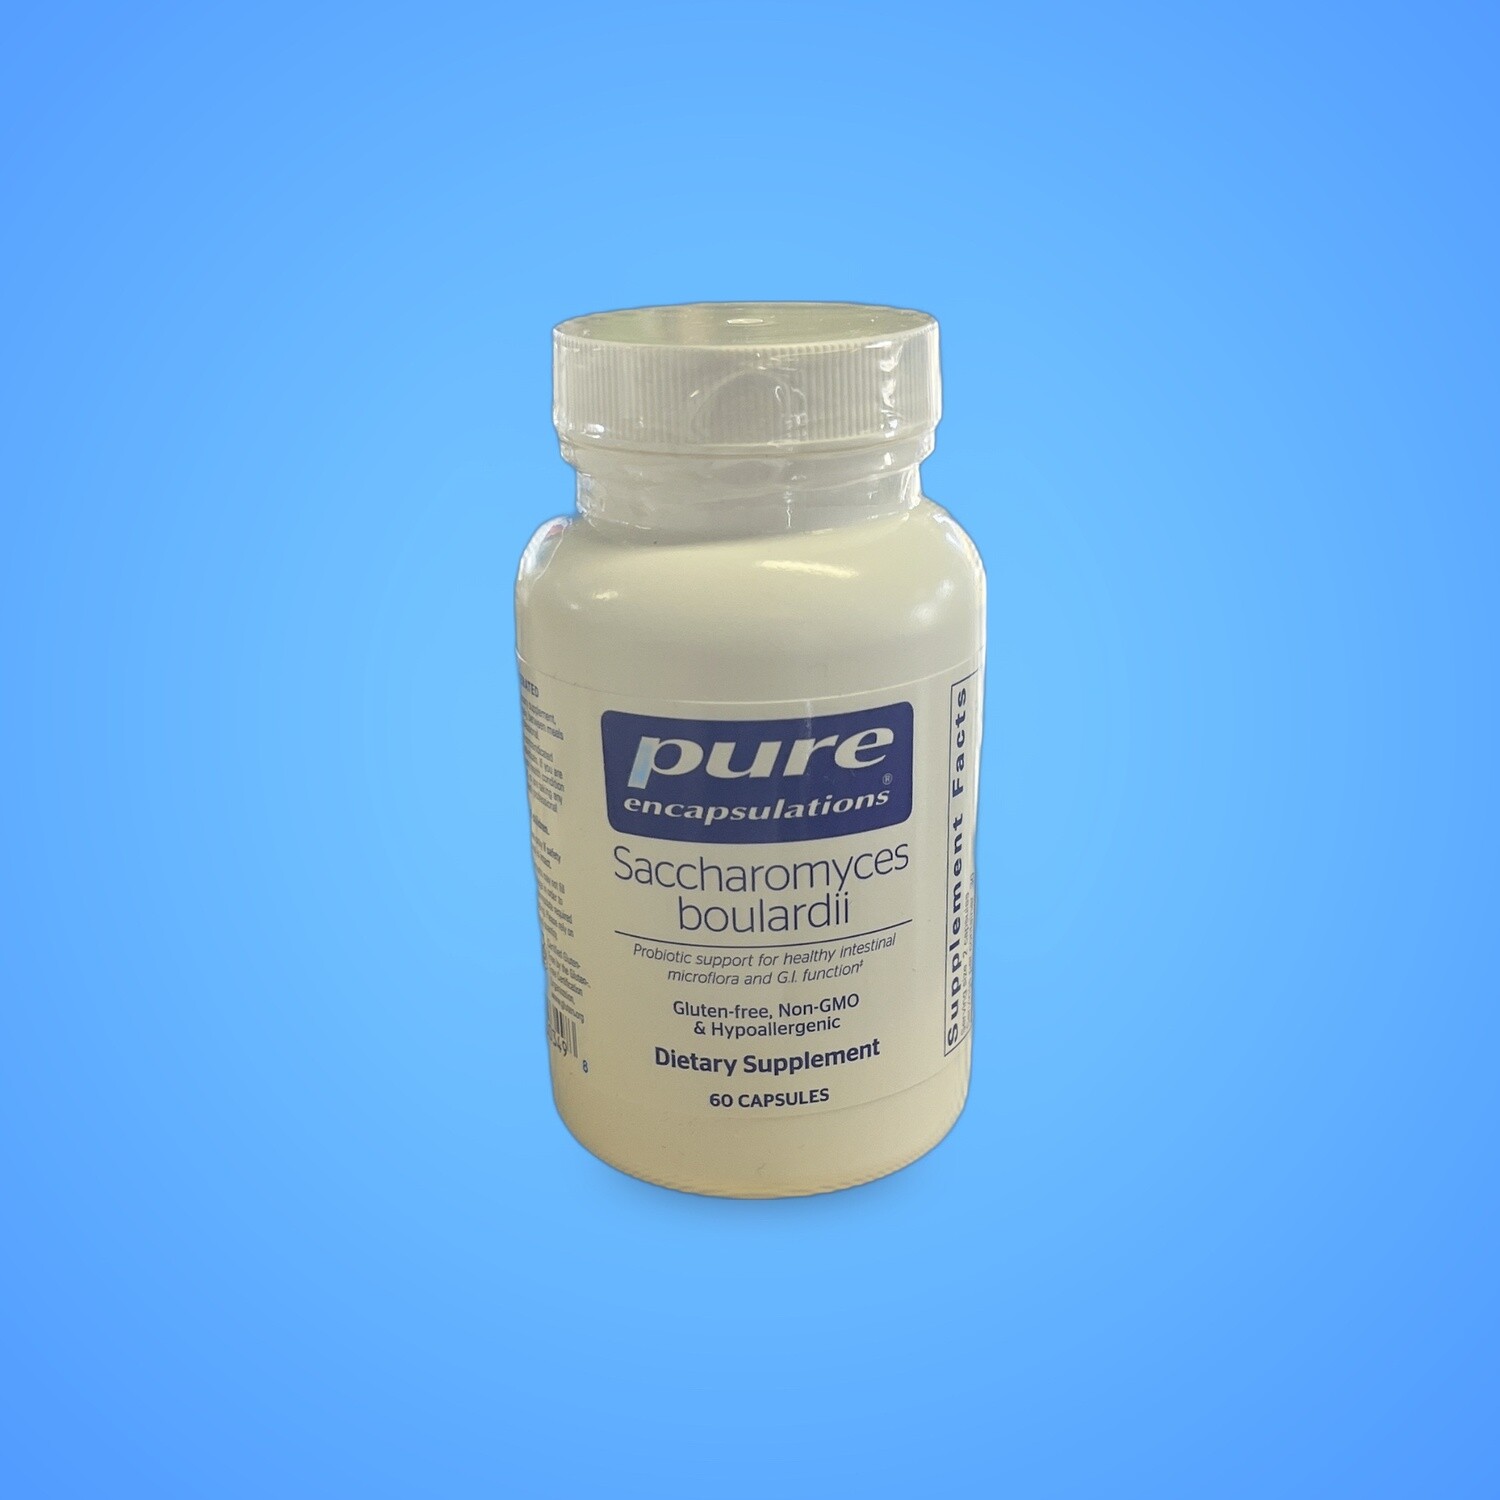 Pure Encapsulations - Saccharomyces Boulardii - Natural Probiotic to Balance Intestinal Flora